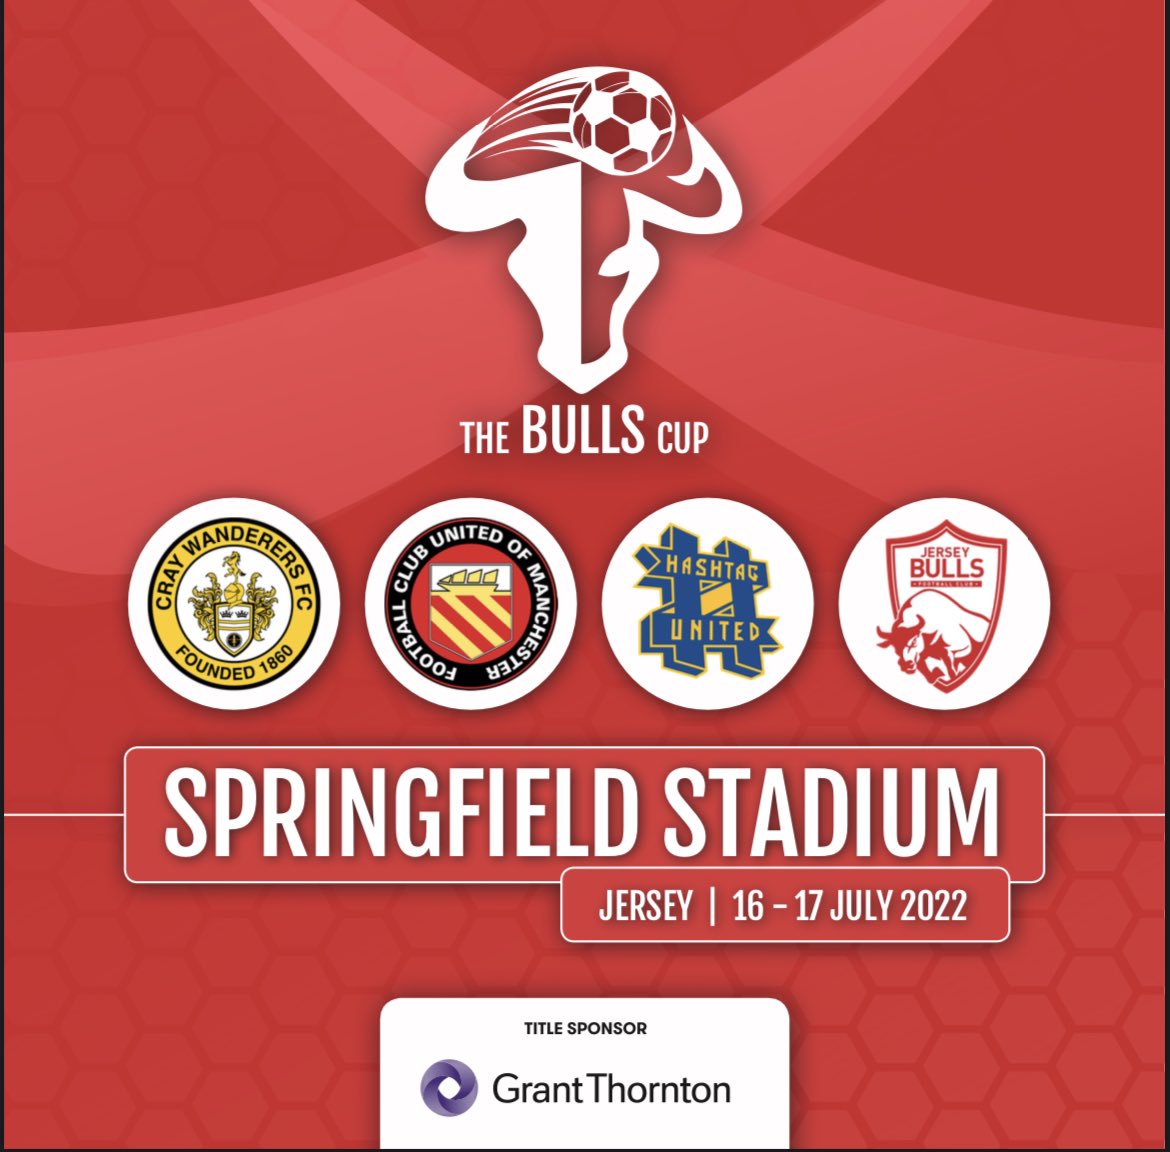 Jersey Bulls vs Ascot United - Match Programme￼ - Jersey Bulls FC